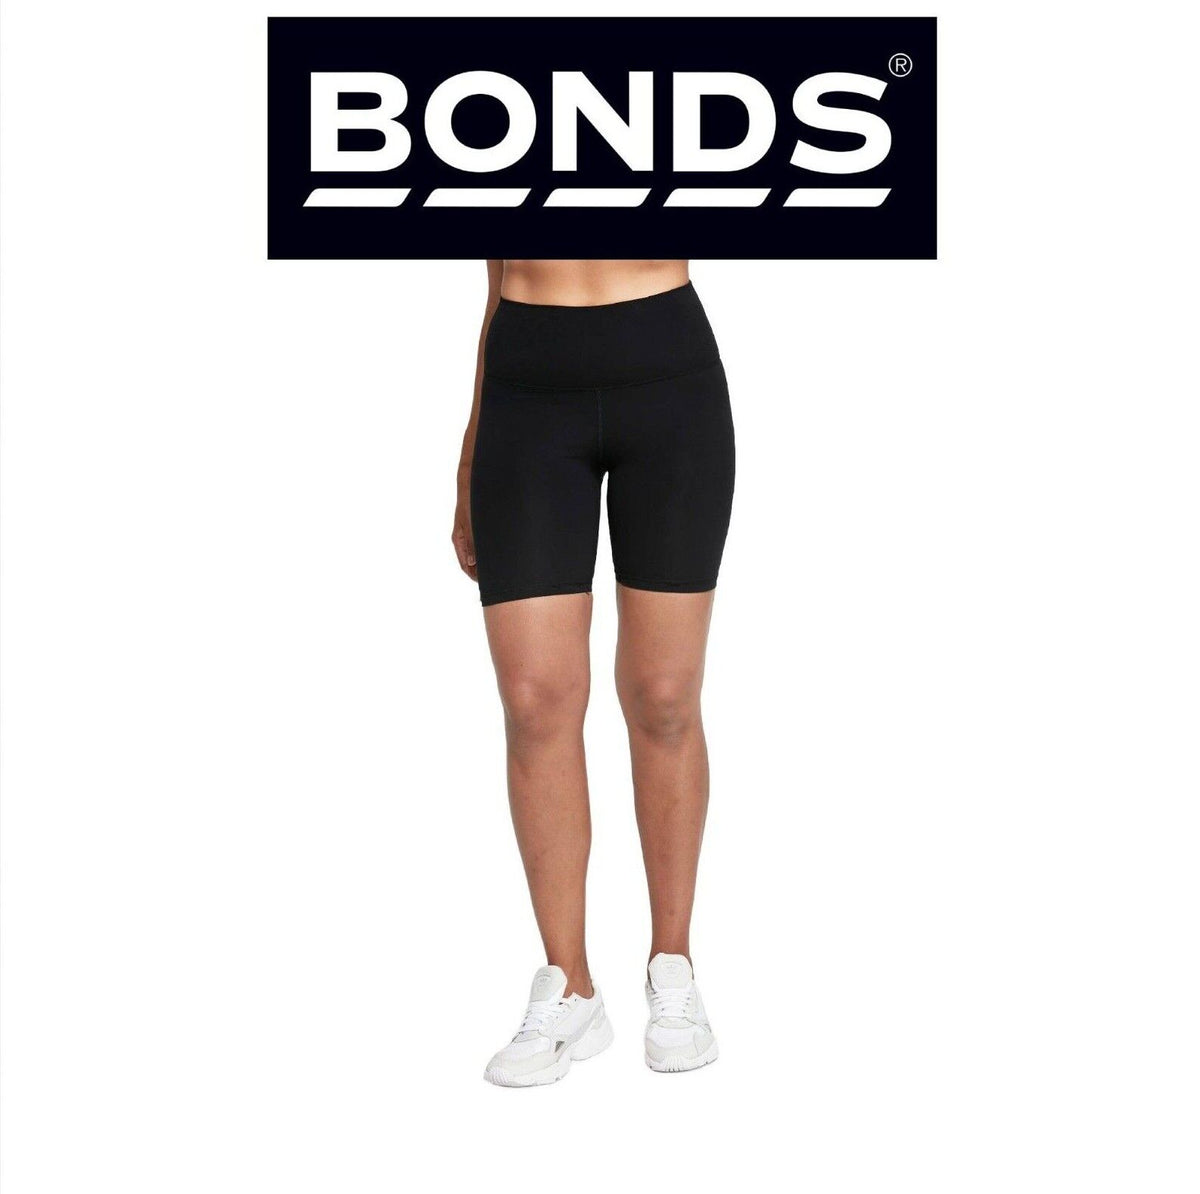 Bonds Womens Sport Bike Short Stretchy Comfortable Dig-Free Fit CTL4I